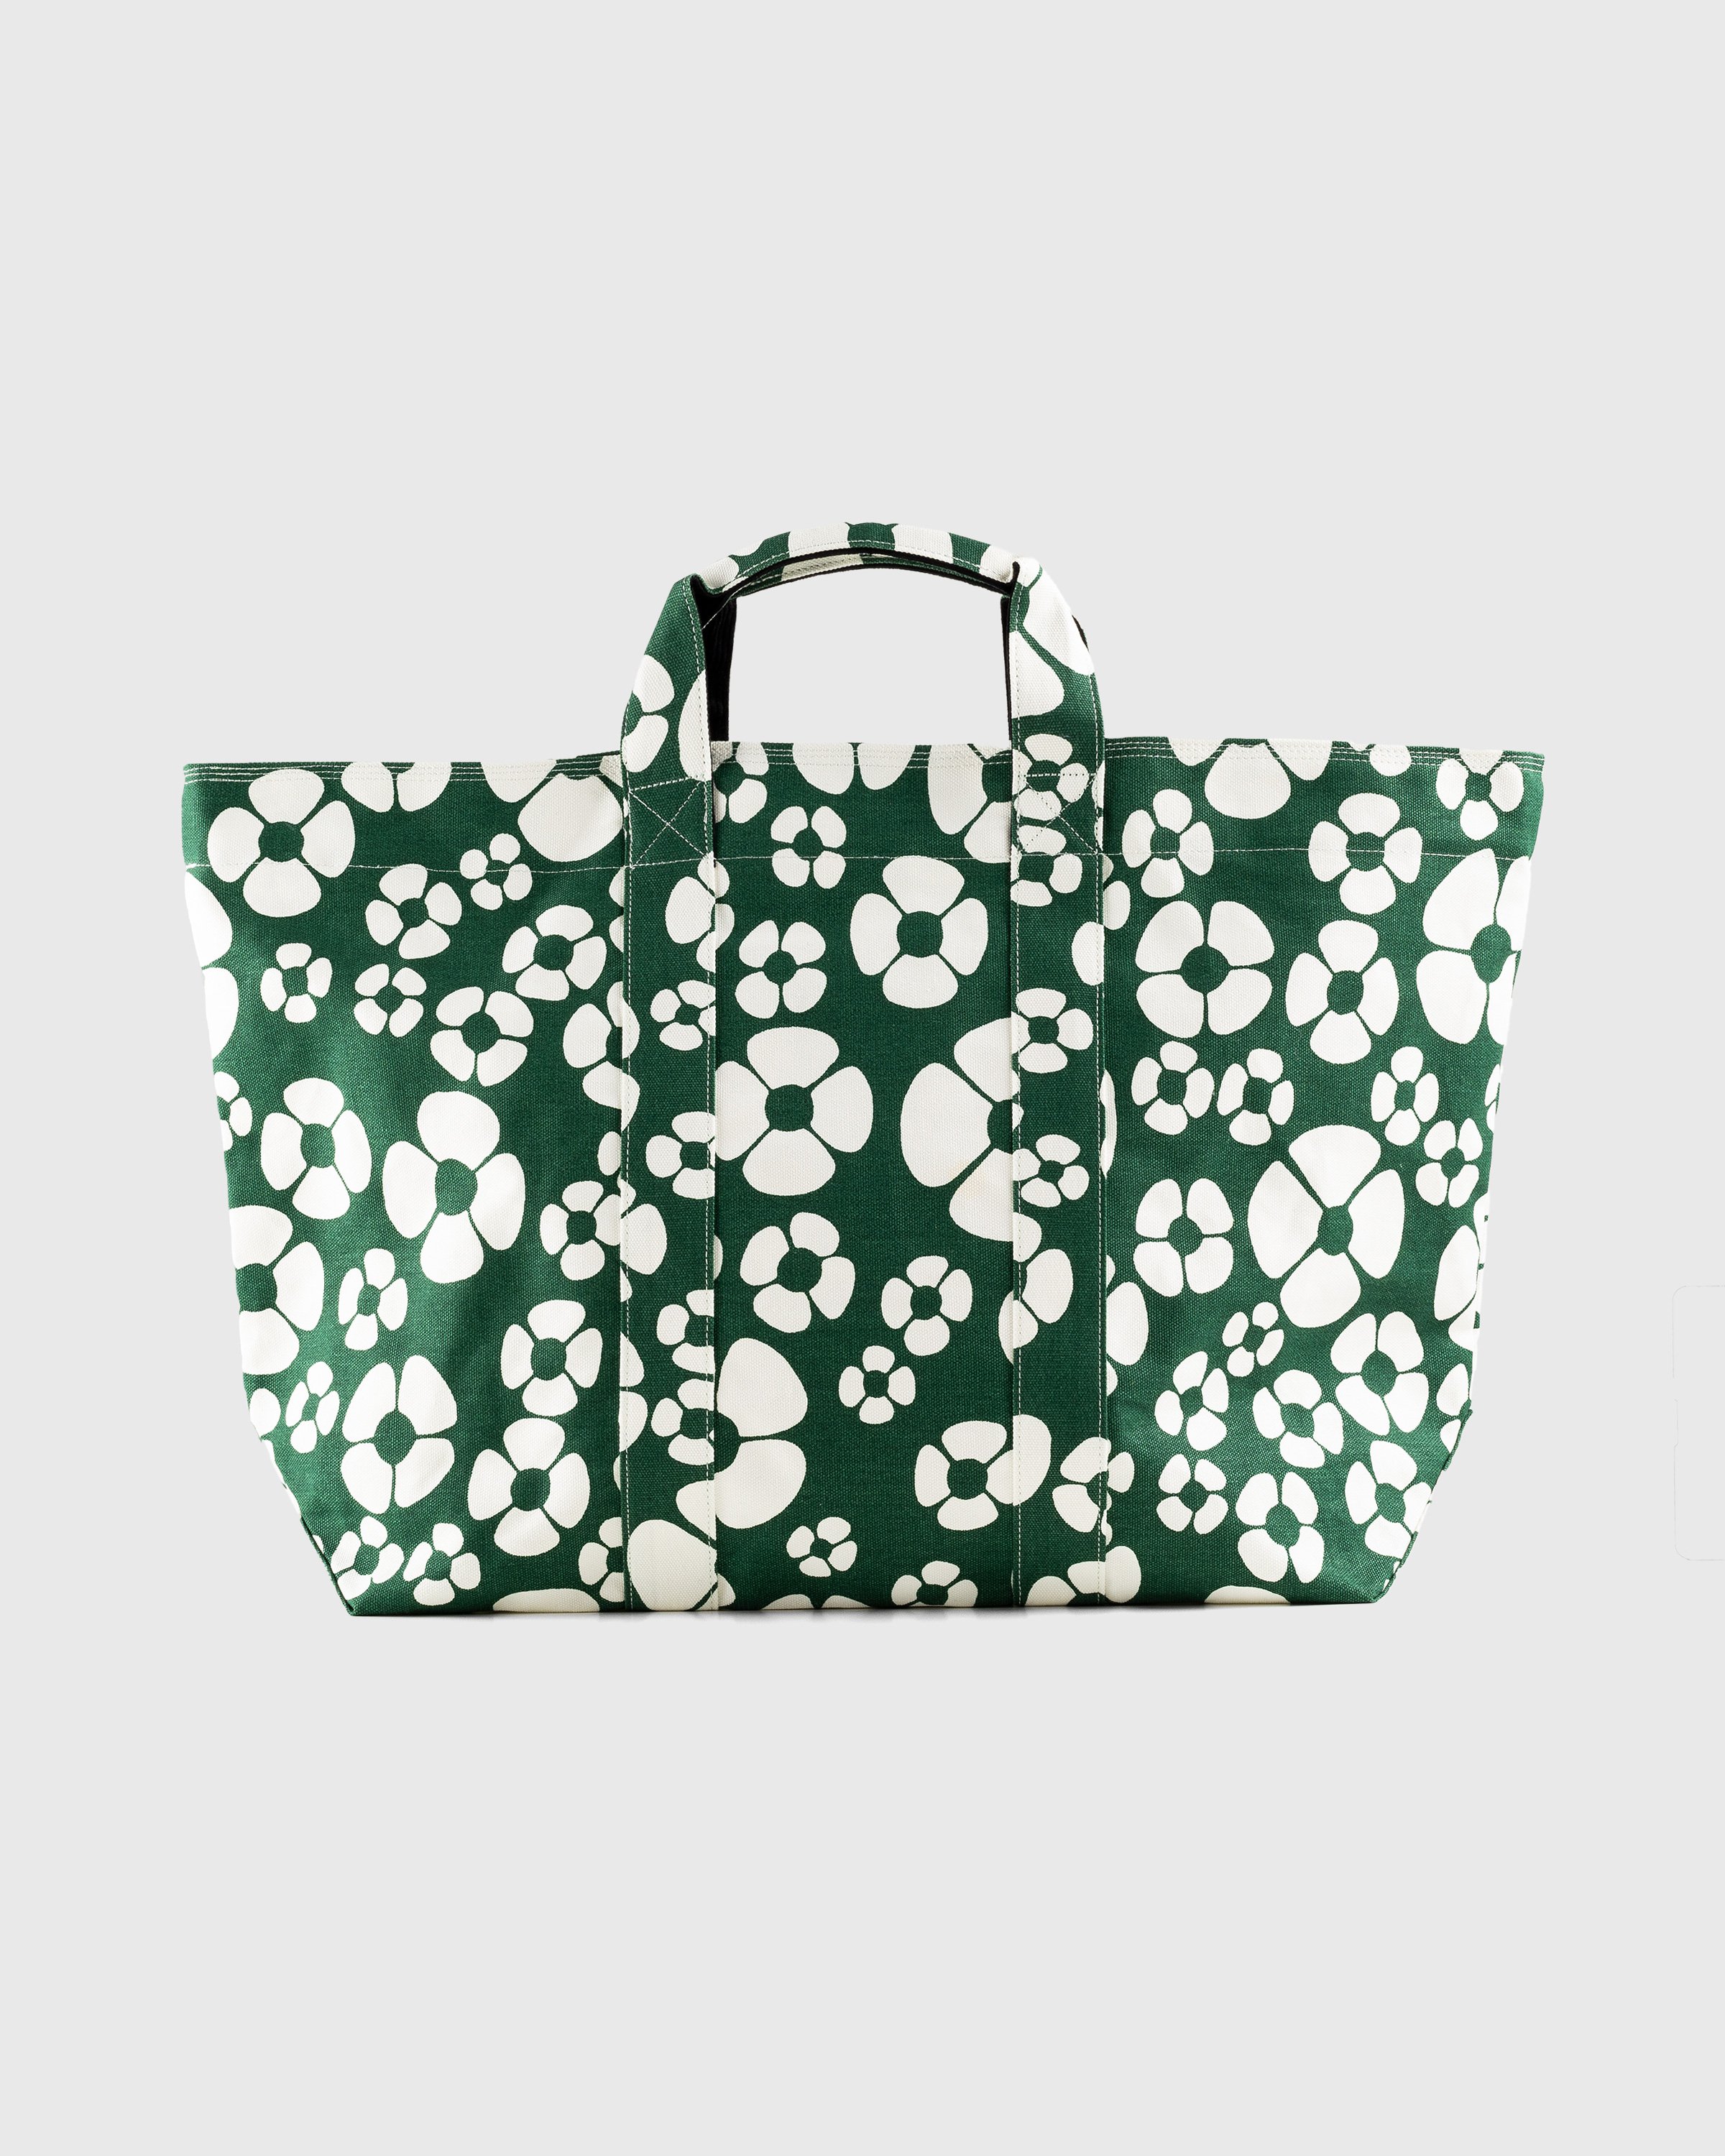 Marni x Carhartt WIP - Floral Shopper Tote Green - Accessories - Green - Image 2